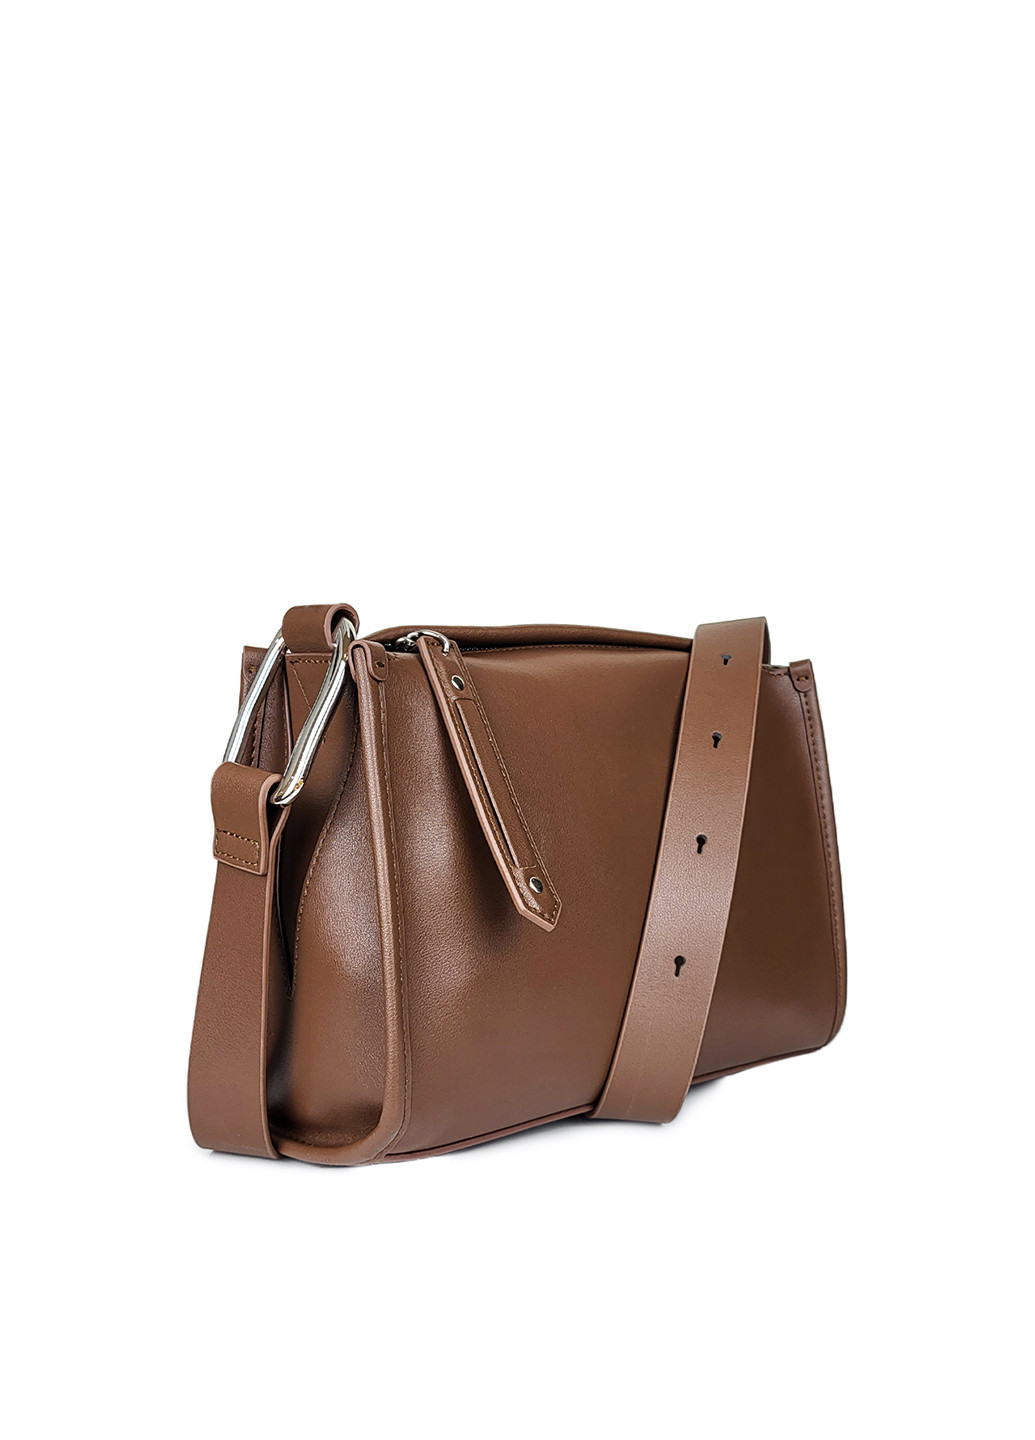 Жіноча сумка крос-боді коричнева шкіра, ZLX-819 кор, Fashion (268120706)